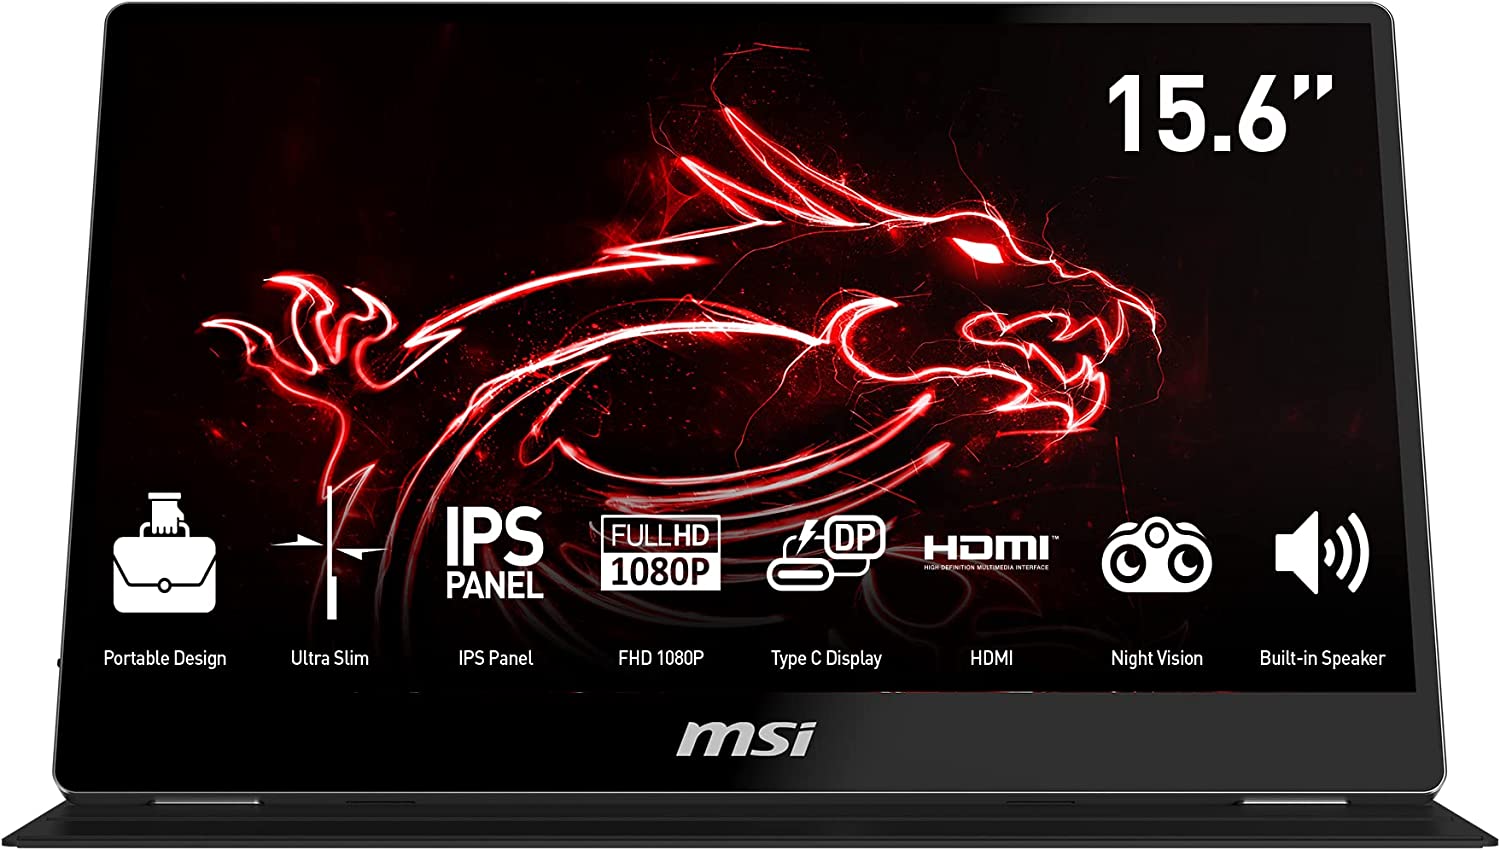 MSI Optix MAG162V Gaming IPS Monitor - eTeknix